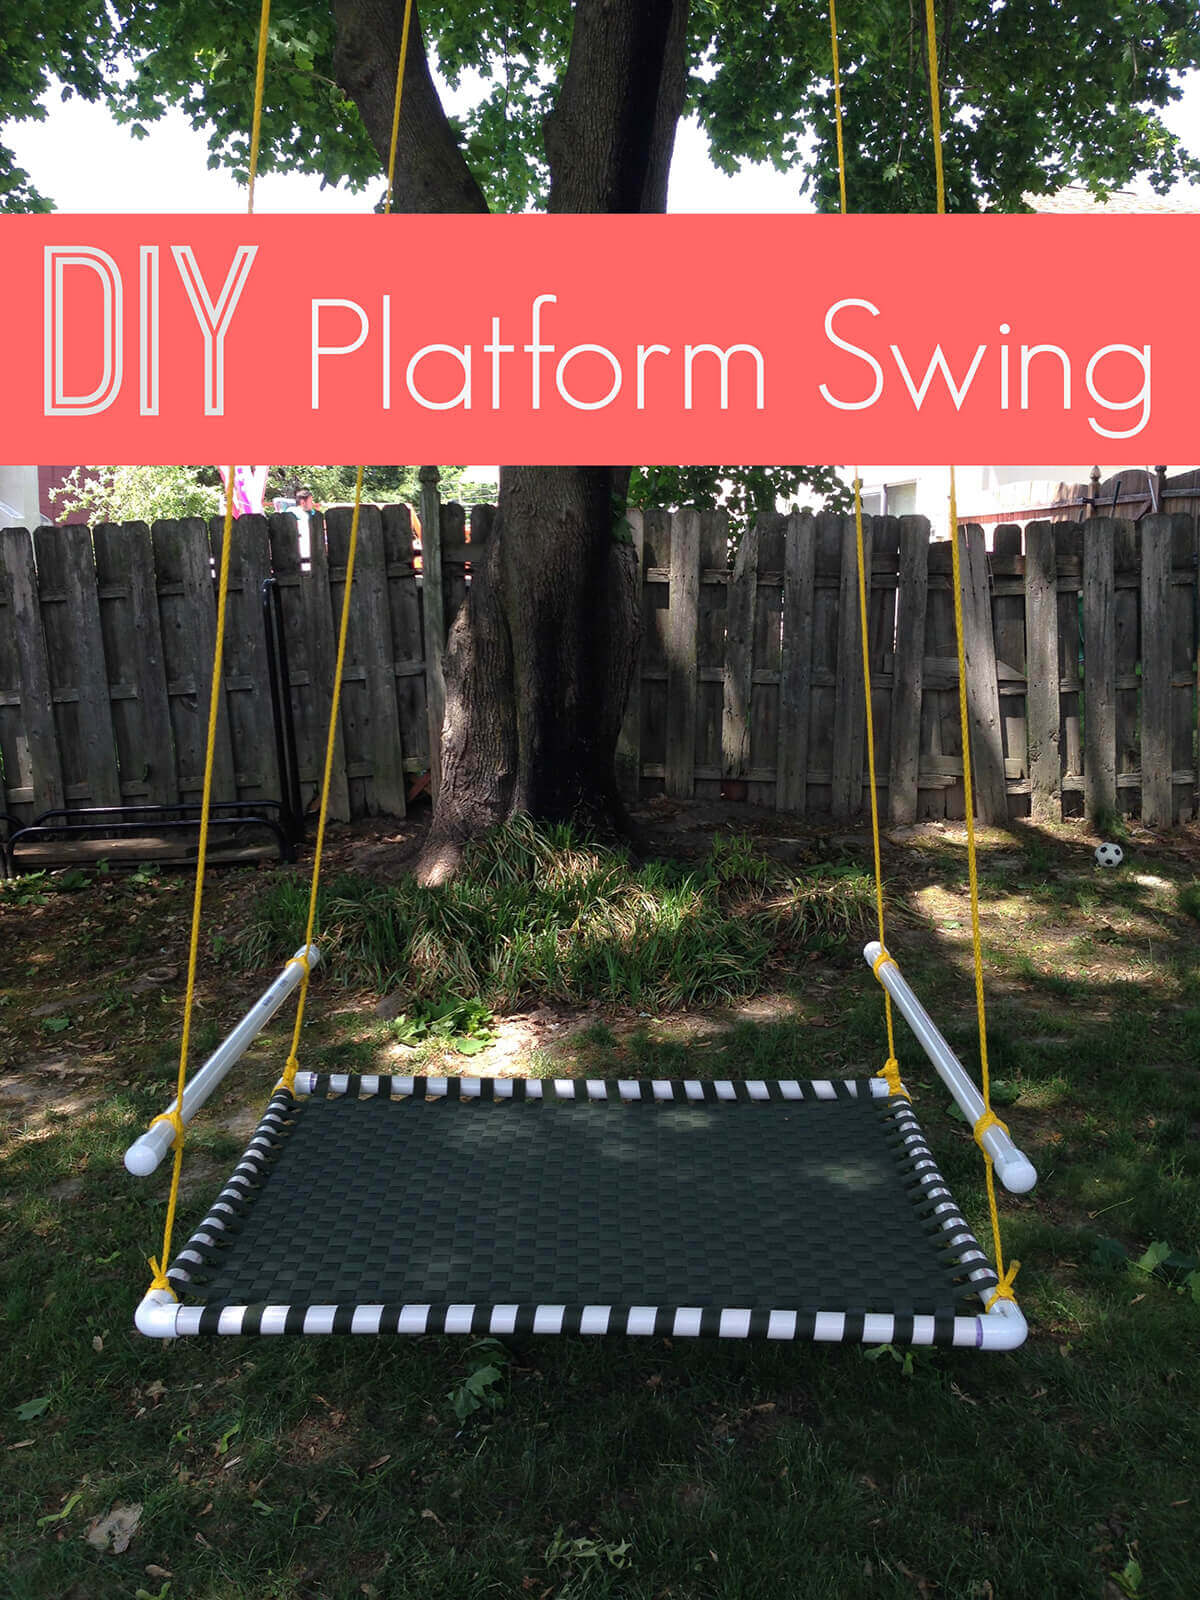 Totally Lounge-worthy DIY Platform Swing